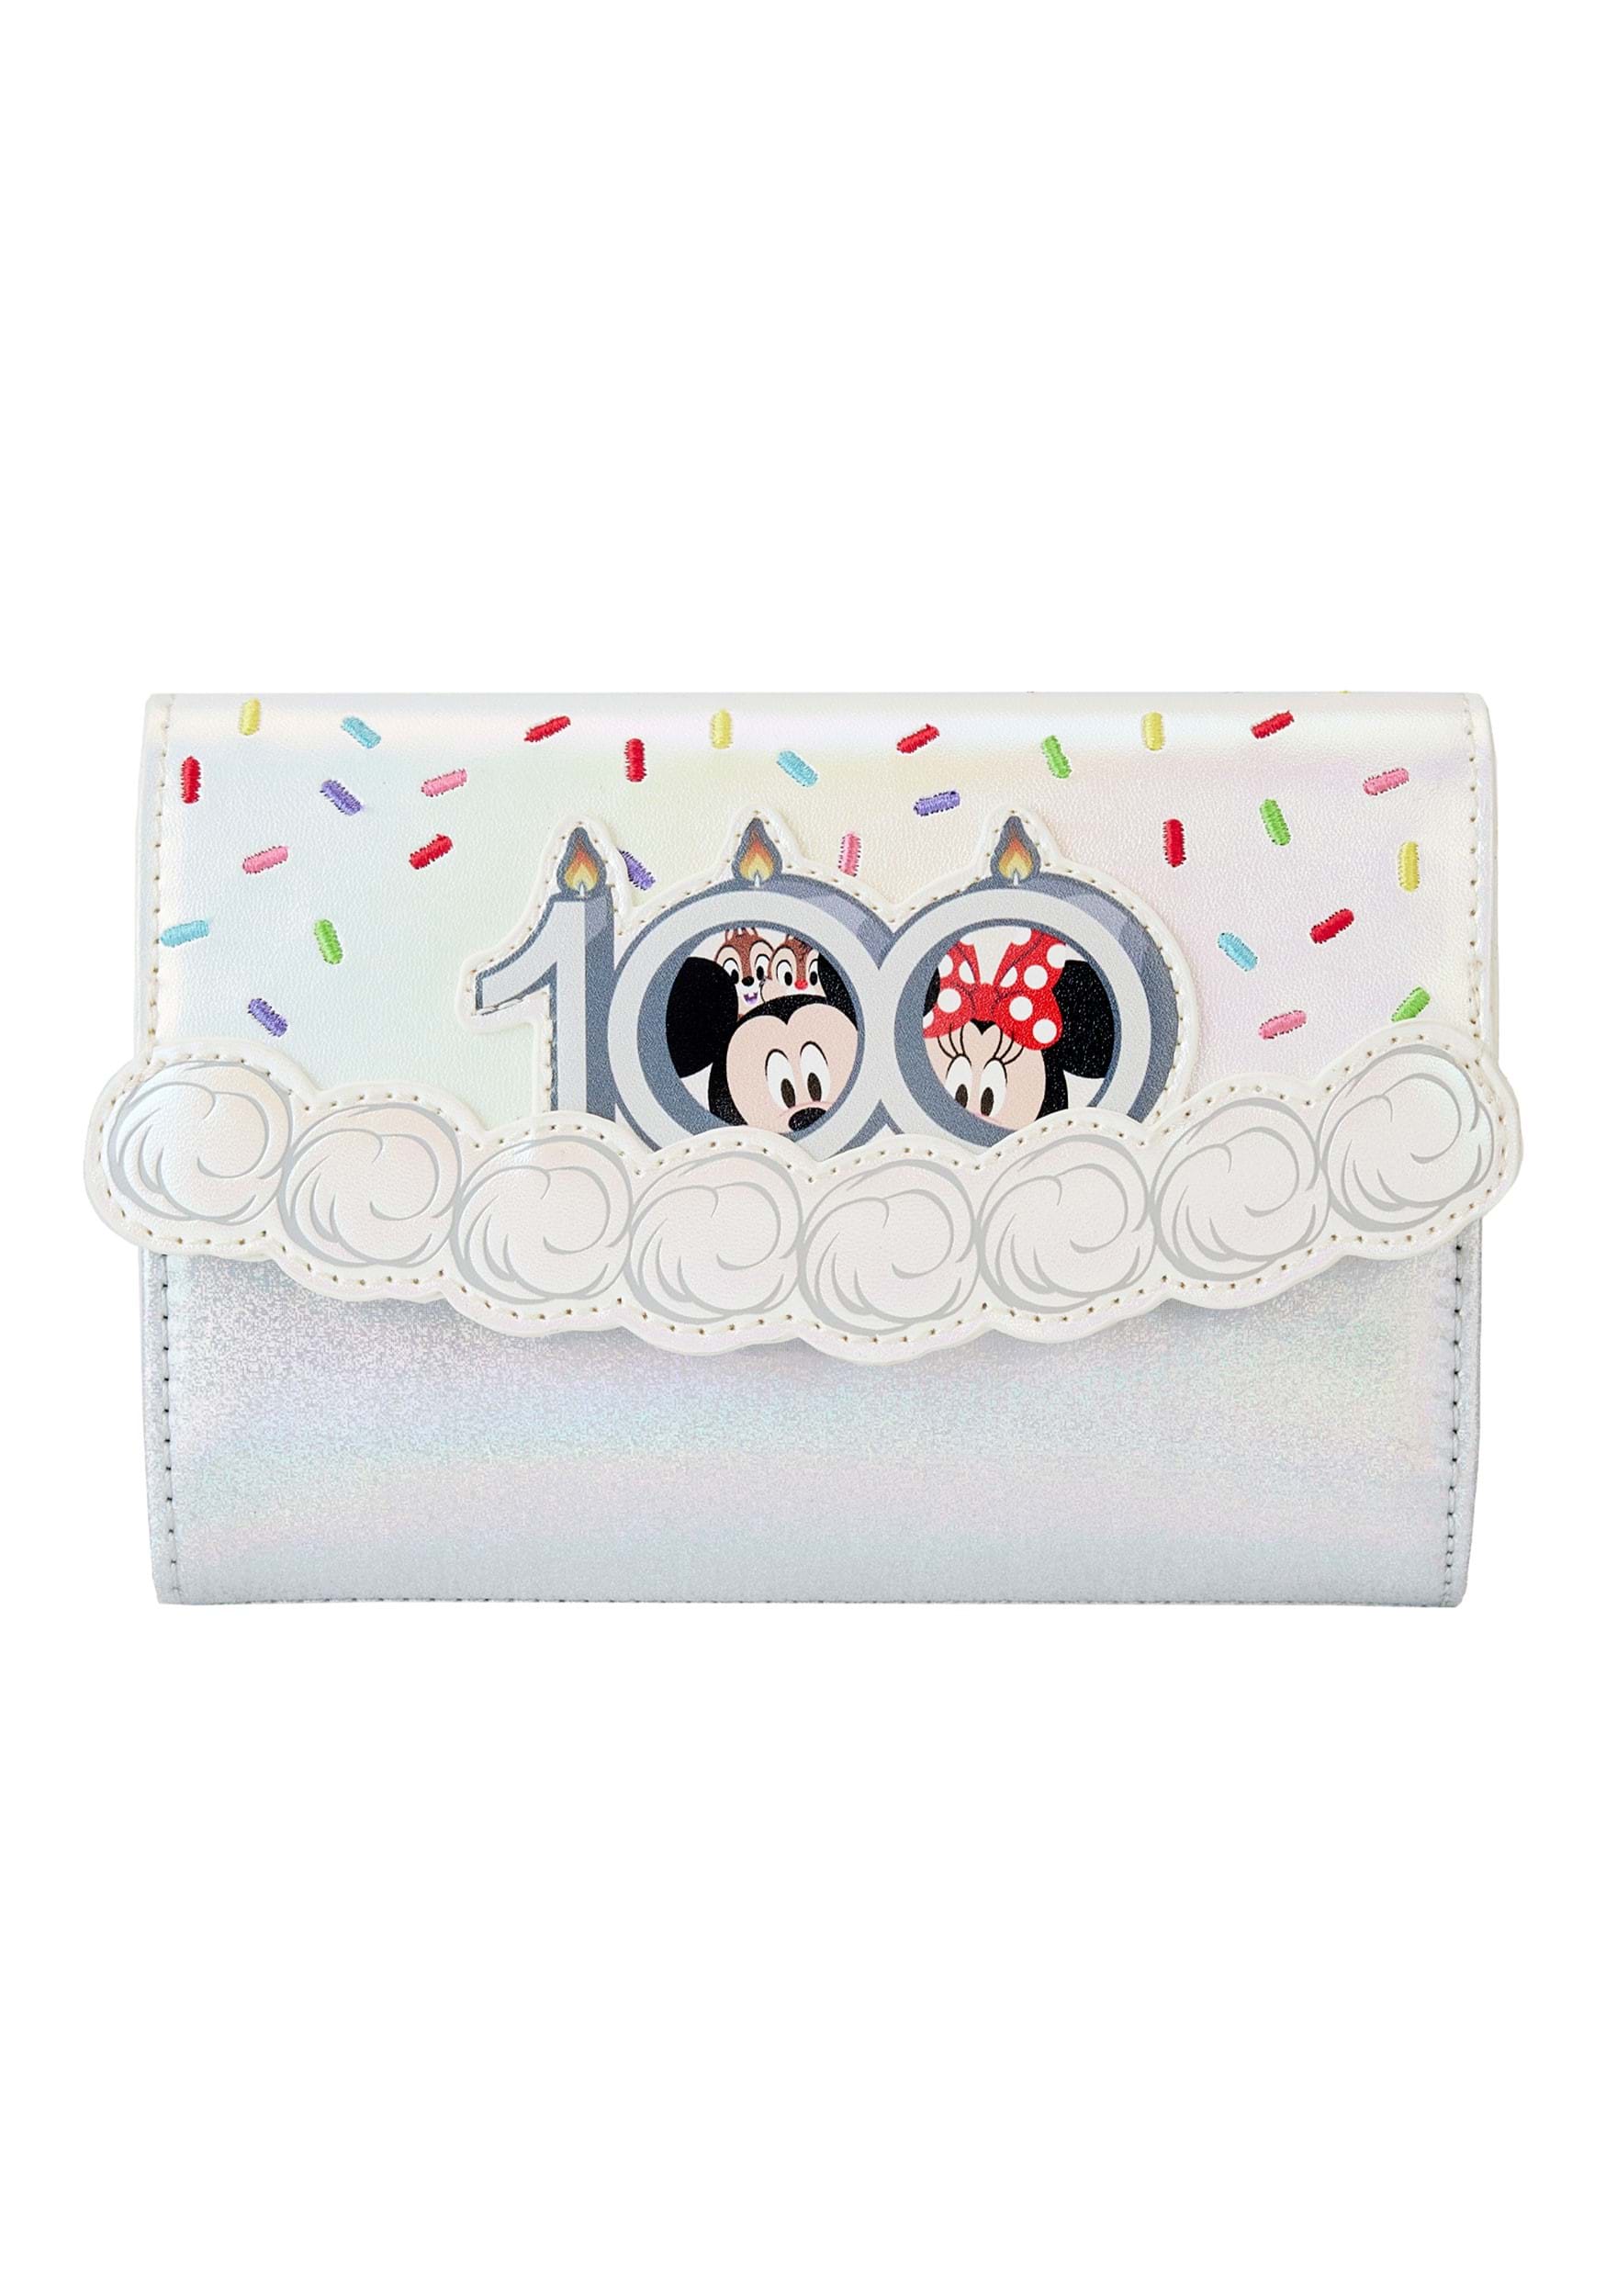 Disney 100 Celebration Cake Loungefly Wallet | Disney Wallets